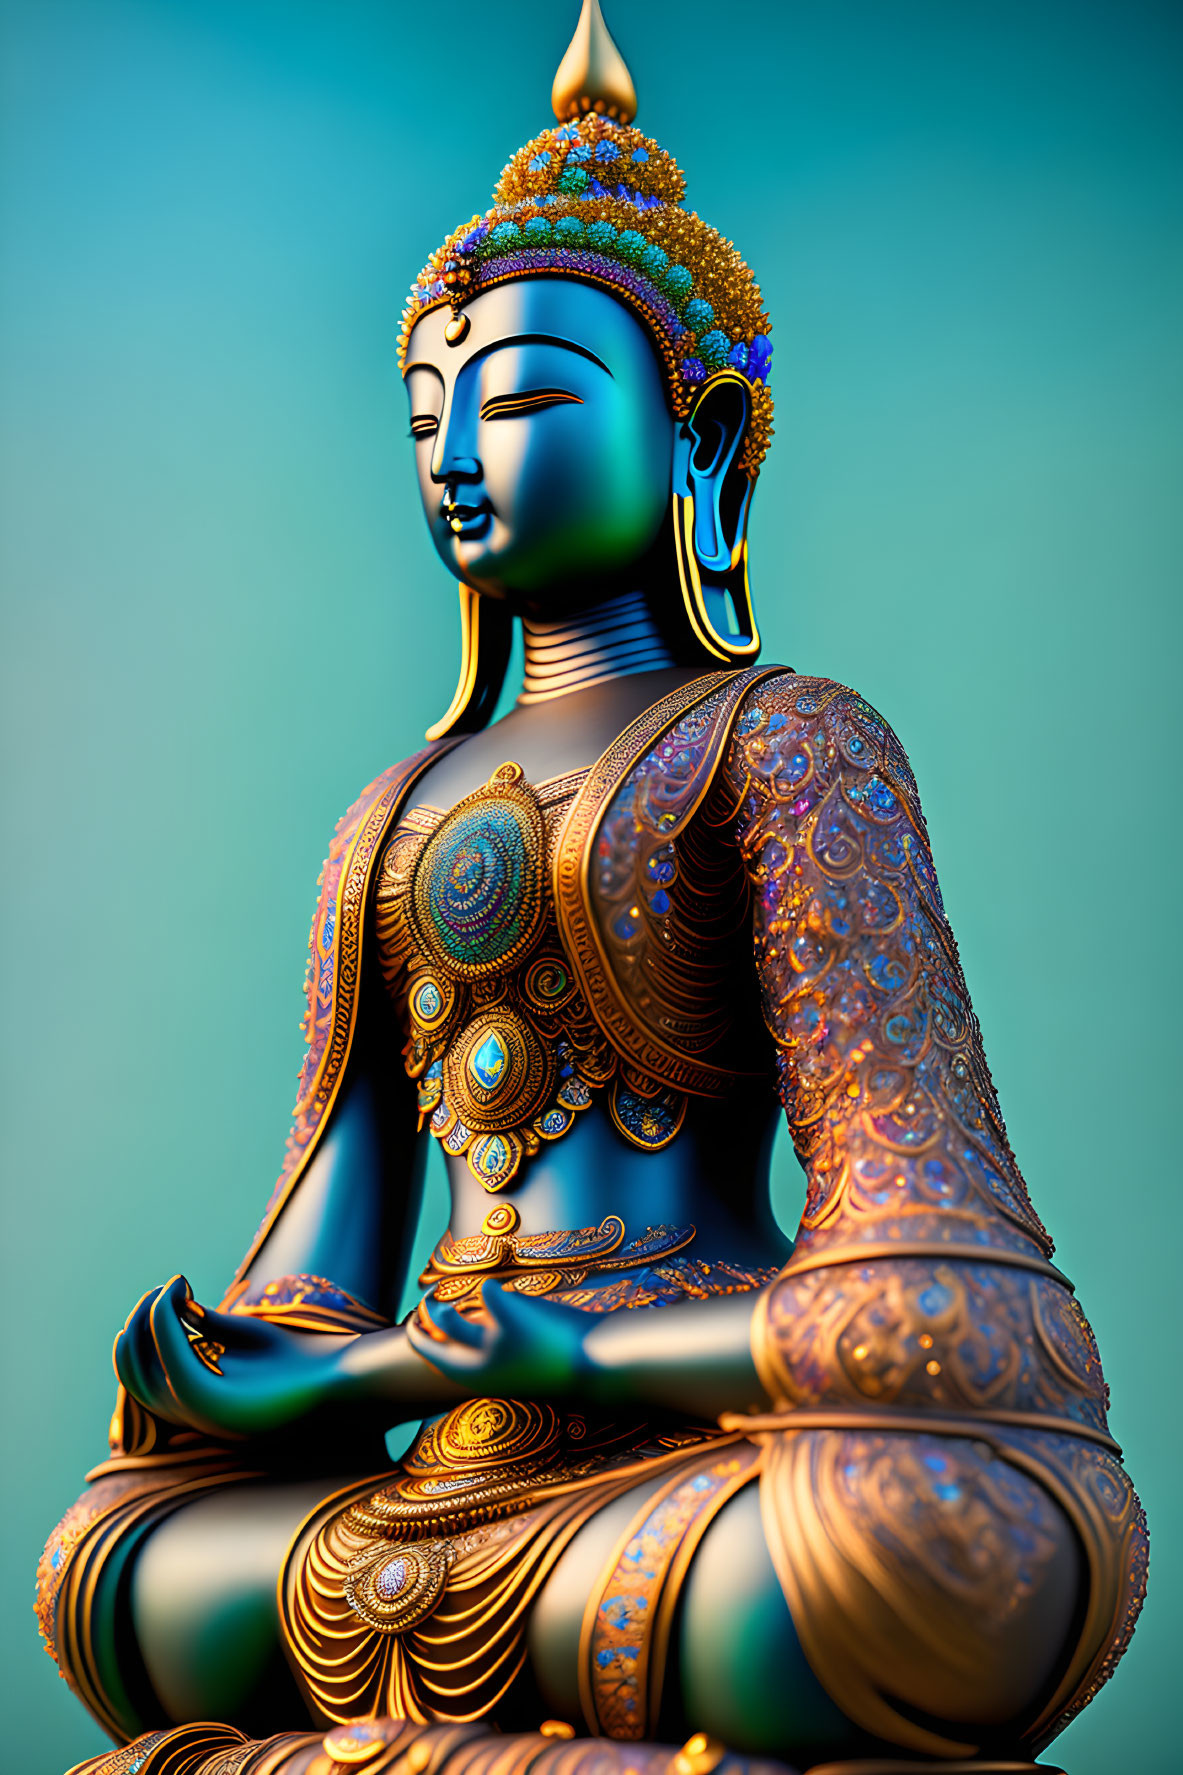 Vibrant Buddha Figure Meditating with Serene Expression